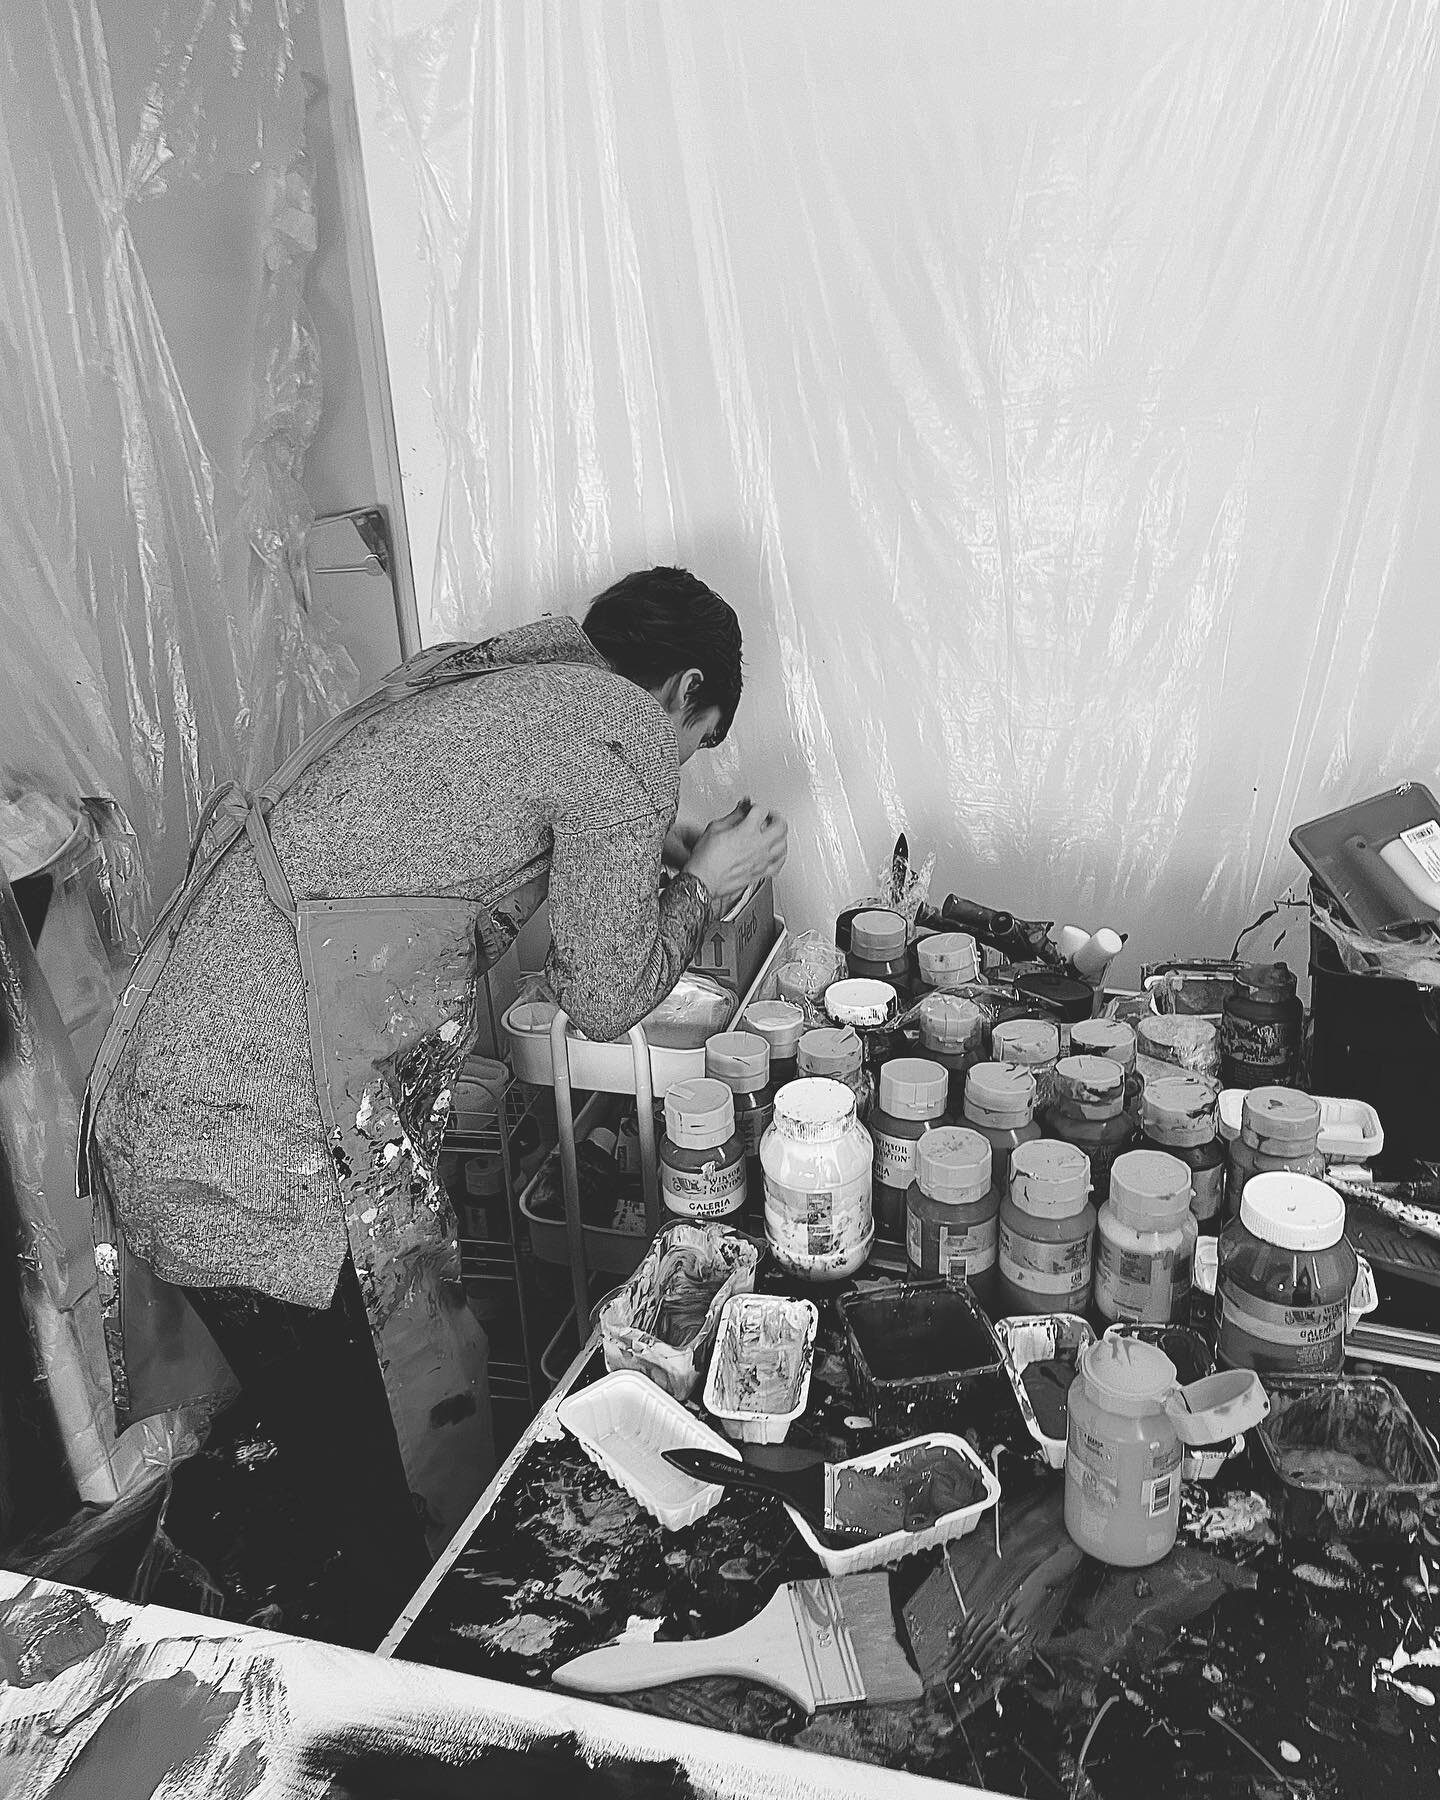 C&eacute;cile Lobert
January 2023
Brussels, Belgium

Discover UNSPOKEN @shrine.nyc

#shrinenyc #shrinegallery #artstudio #artnyc #artnewyork #newyorkartgallery #newyorkartgalleries #artshow #artistsofinstagram #abstractexpressionism #contemporaryart 